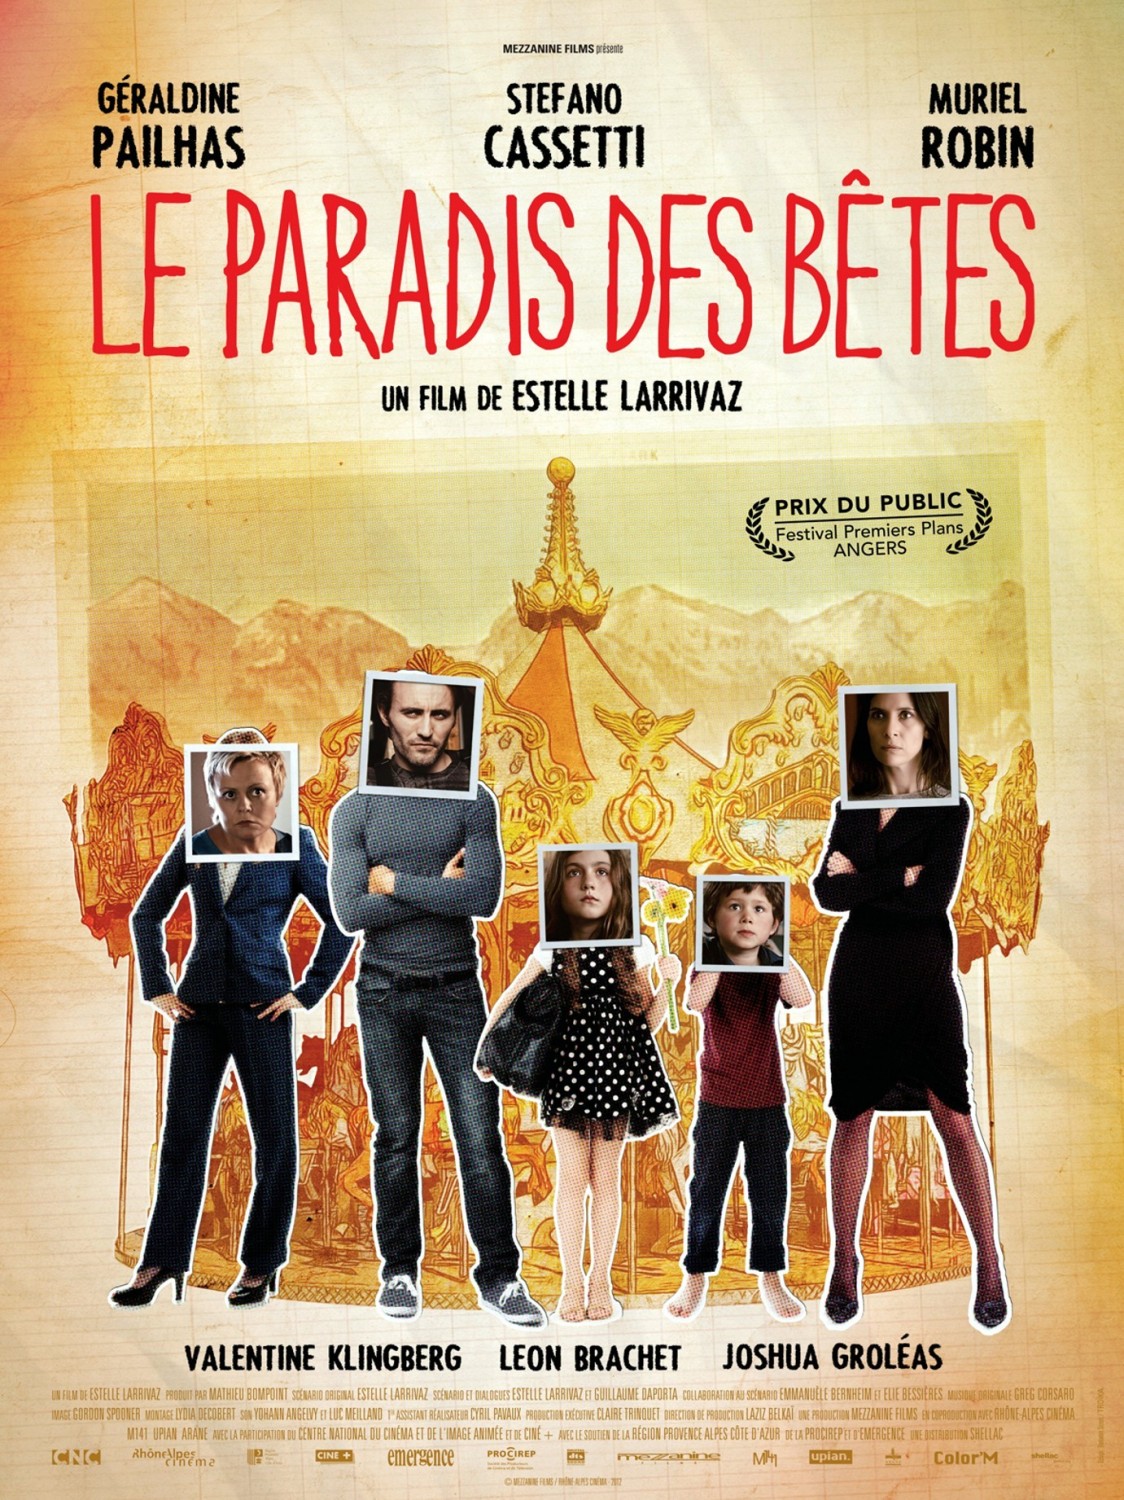 Extra Large Movie Poster Image for Le paradis des bêtes 